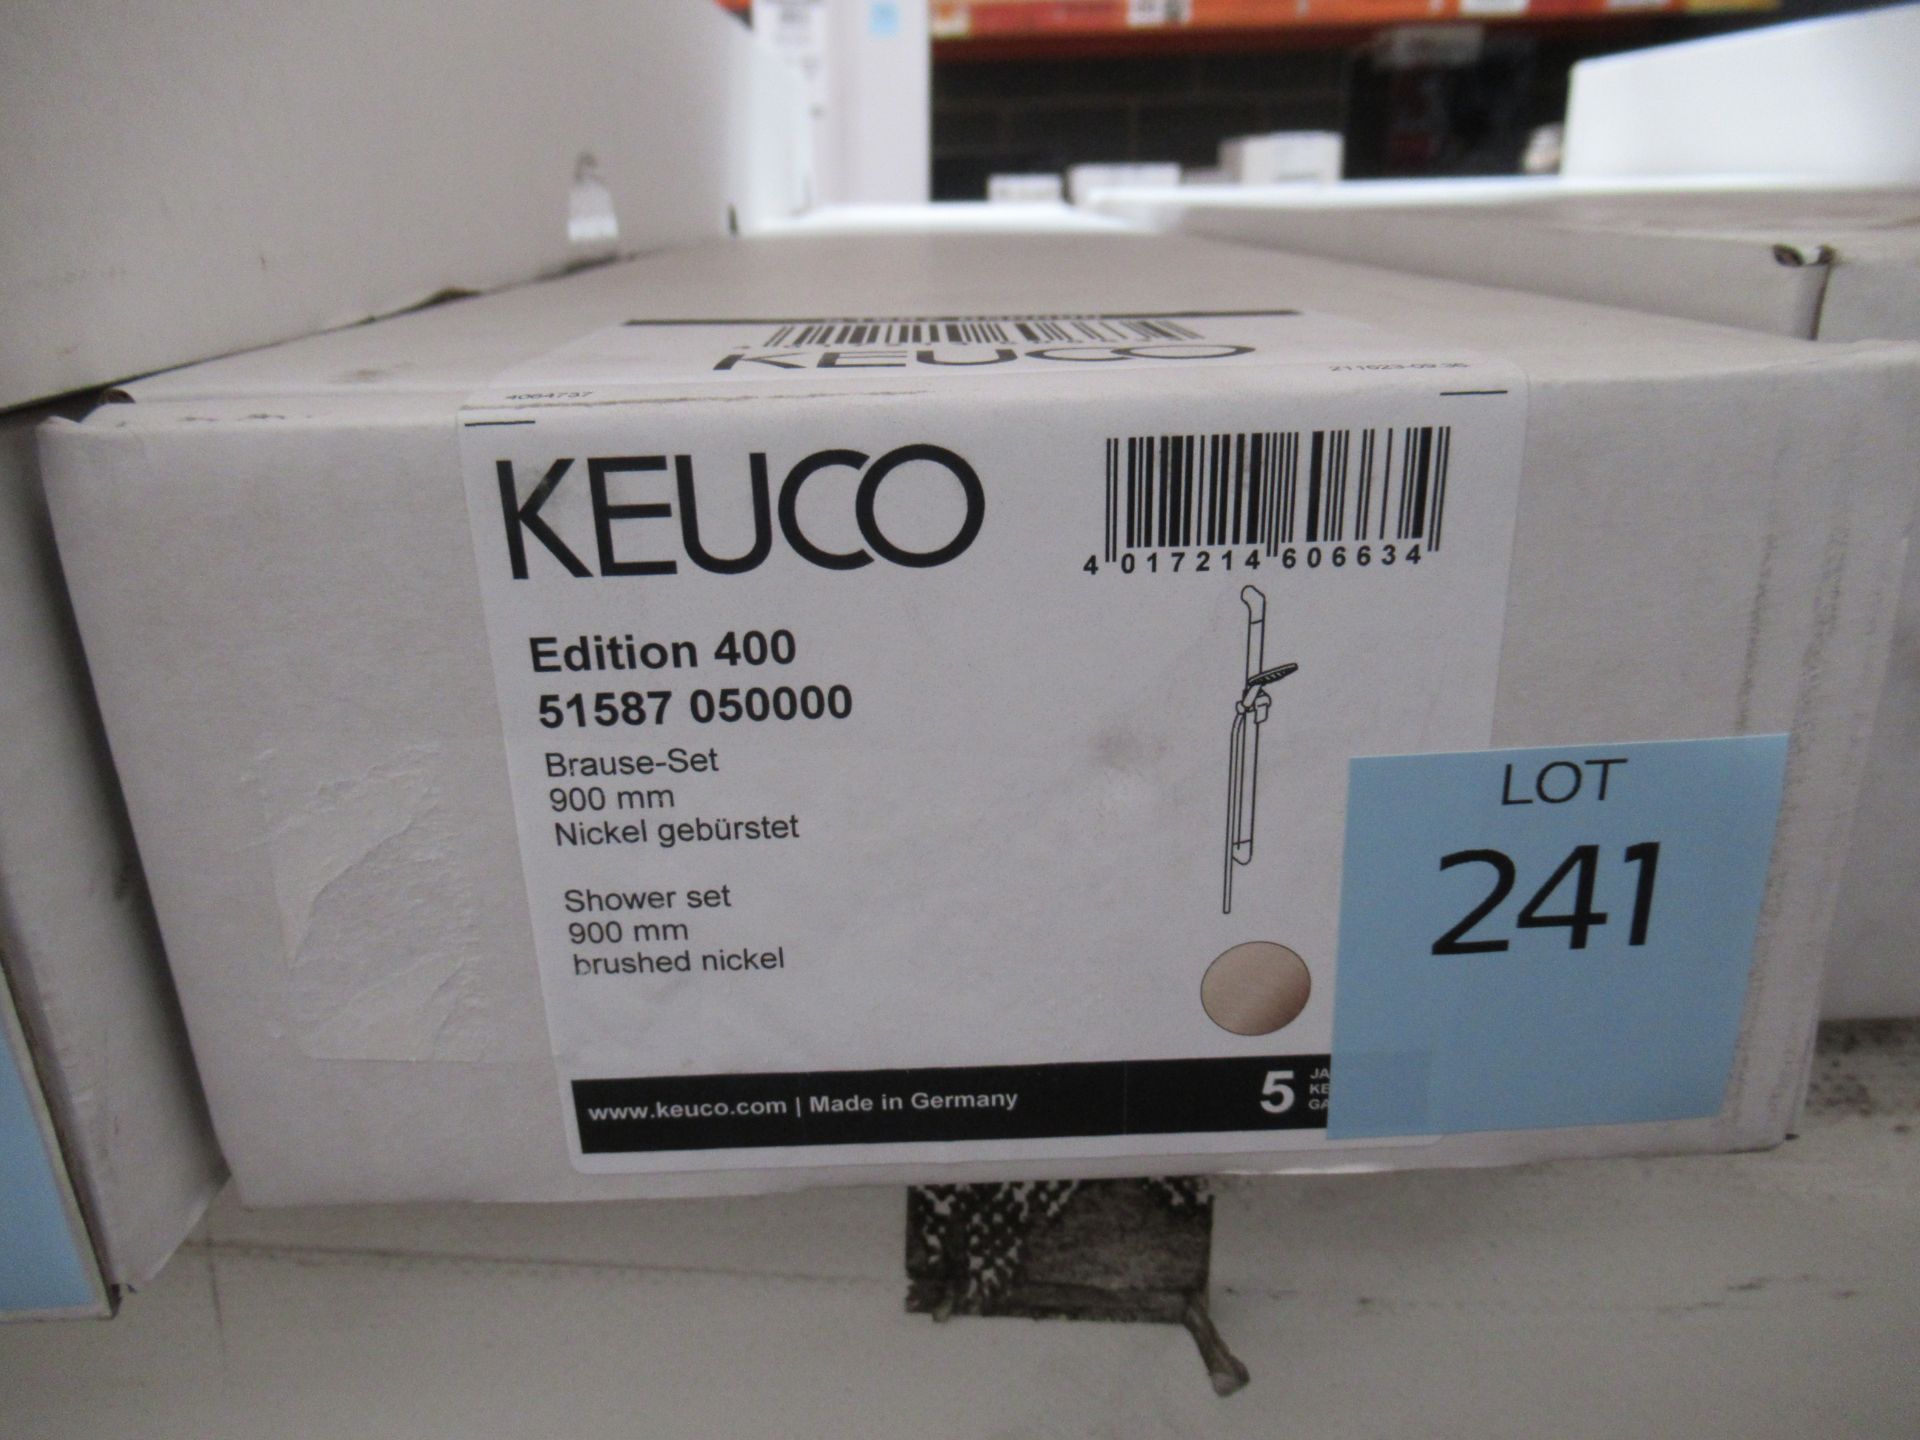 A Keuco Edition 400 Shower Set Brushed Nickel, P/N 51587-050000